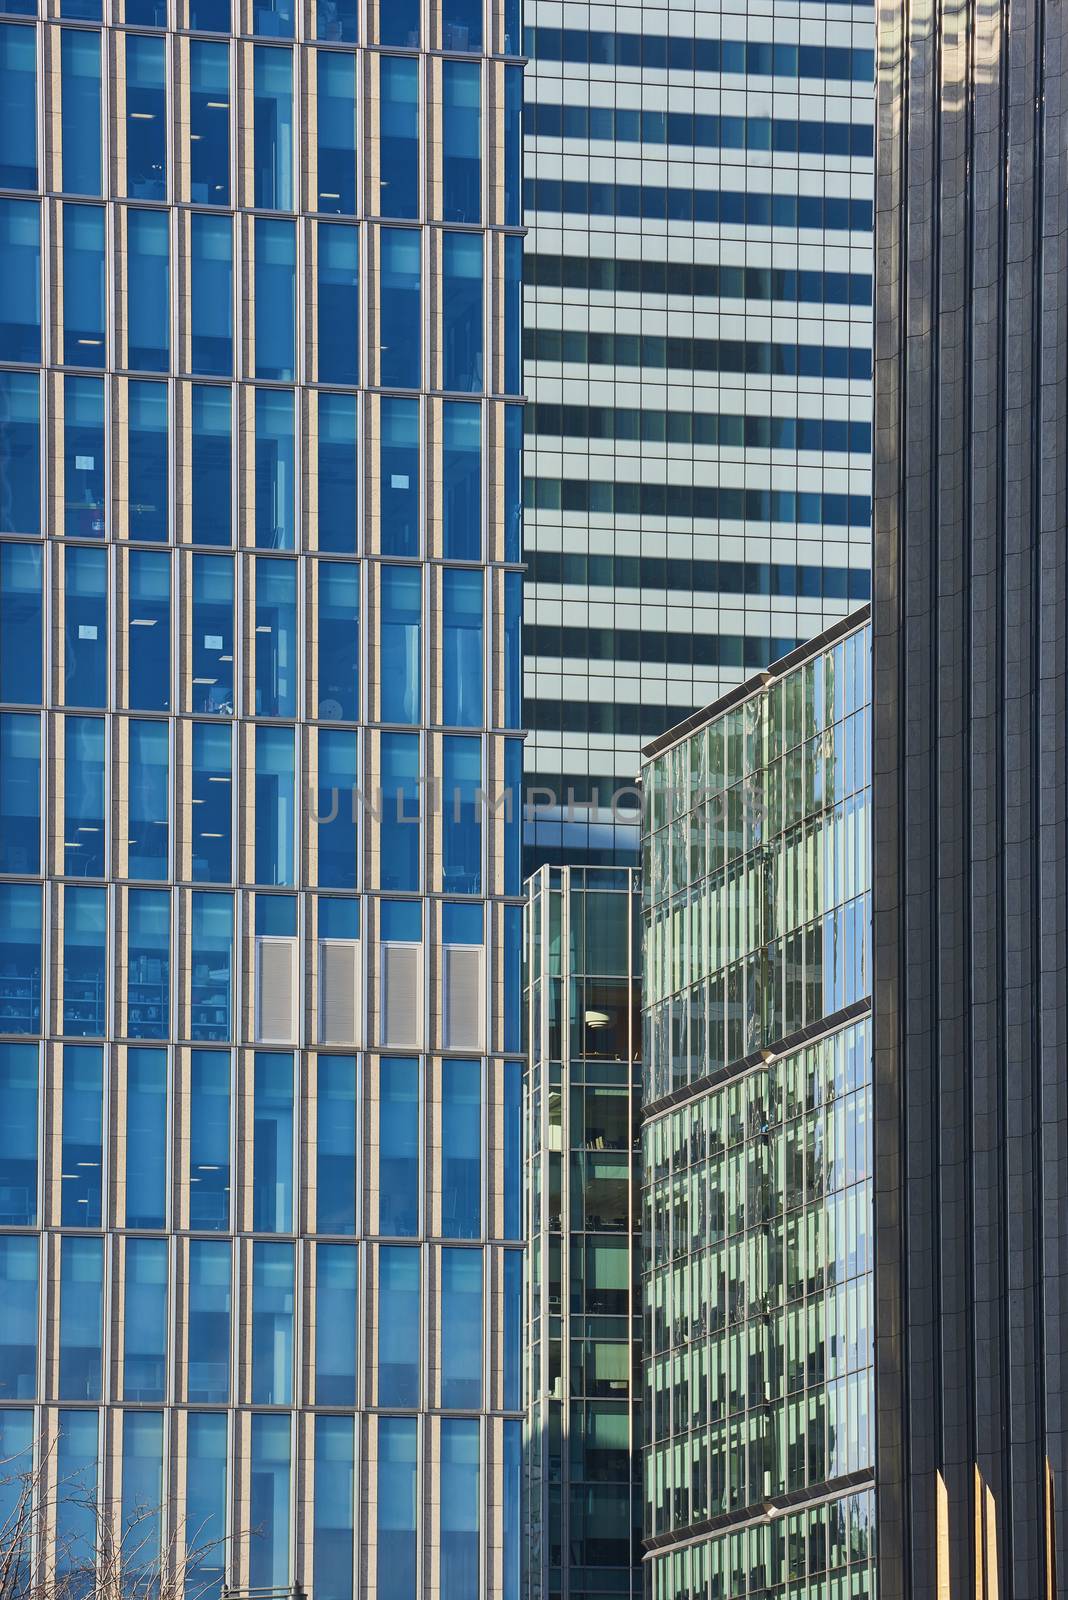 Close up cropped shot of skyscraper window frames in blue metal.